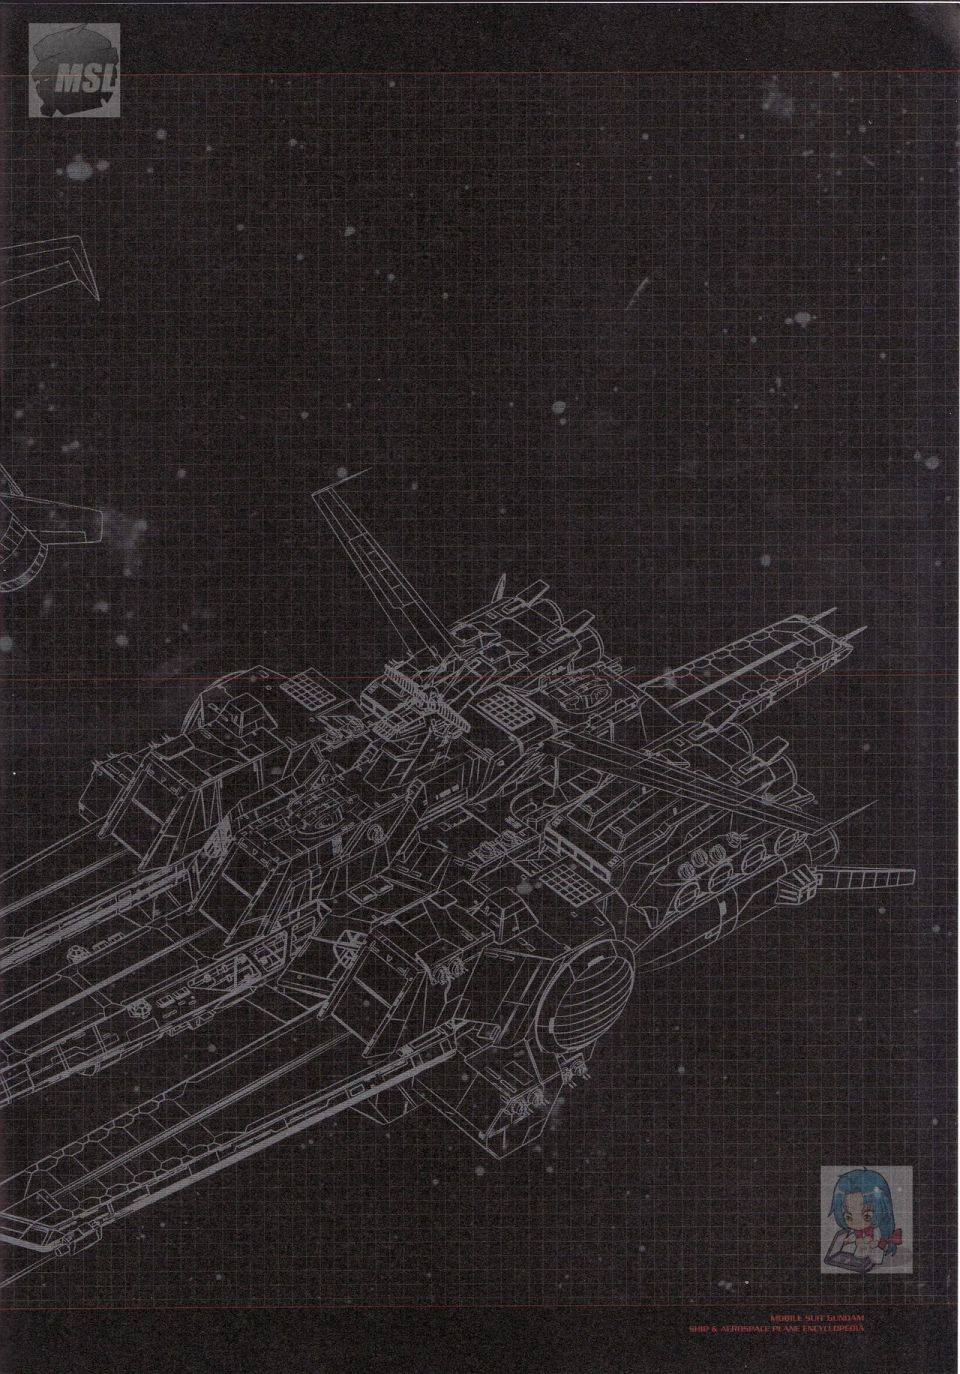 Mobile Suit Gundam - Ship amp; Aerospace Plane Encyclopedia - 第1卷(1/4) - 6